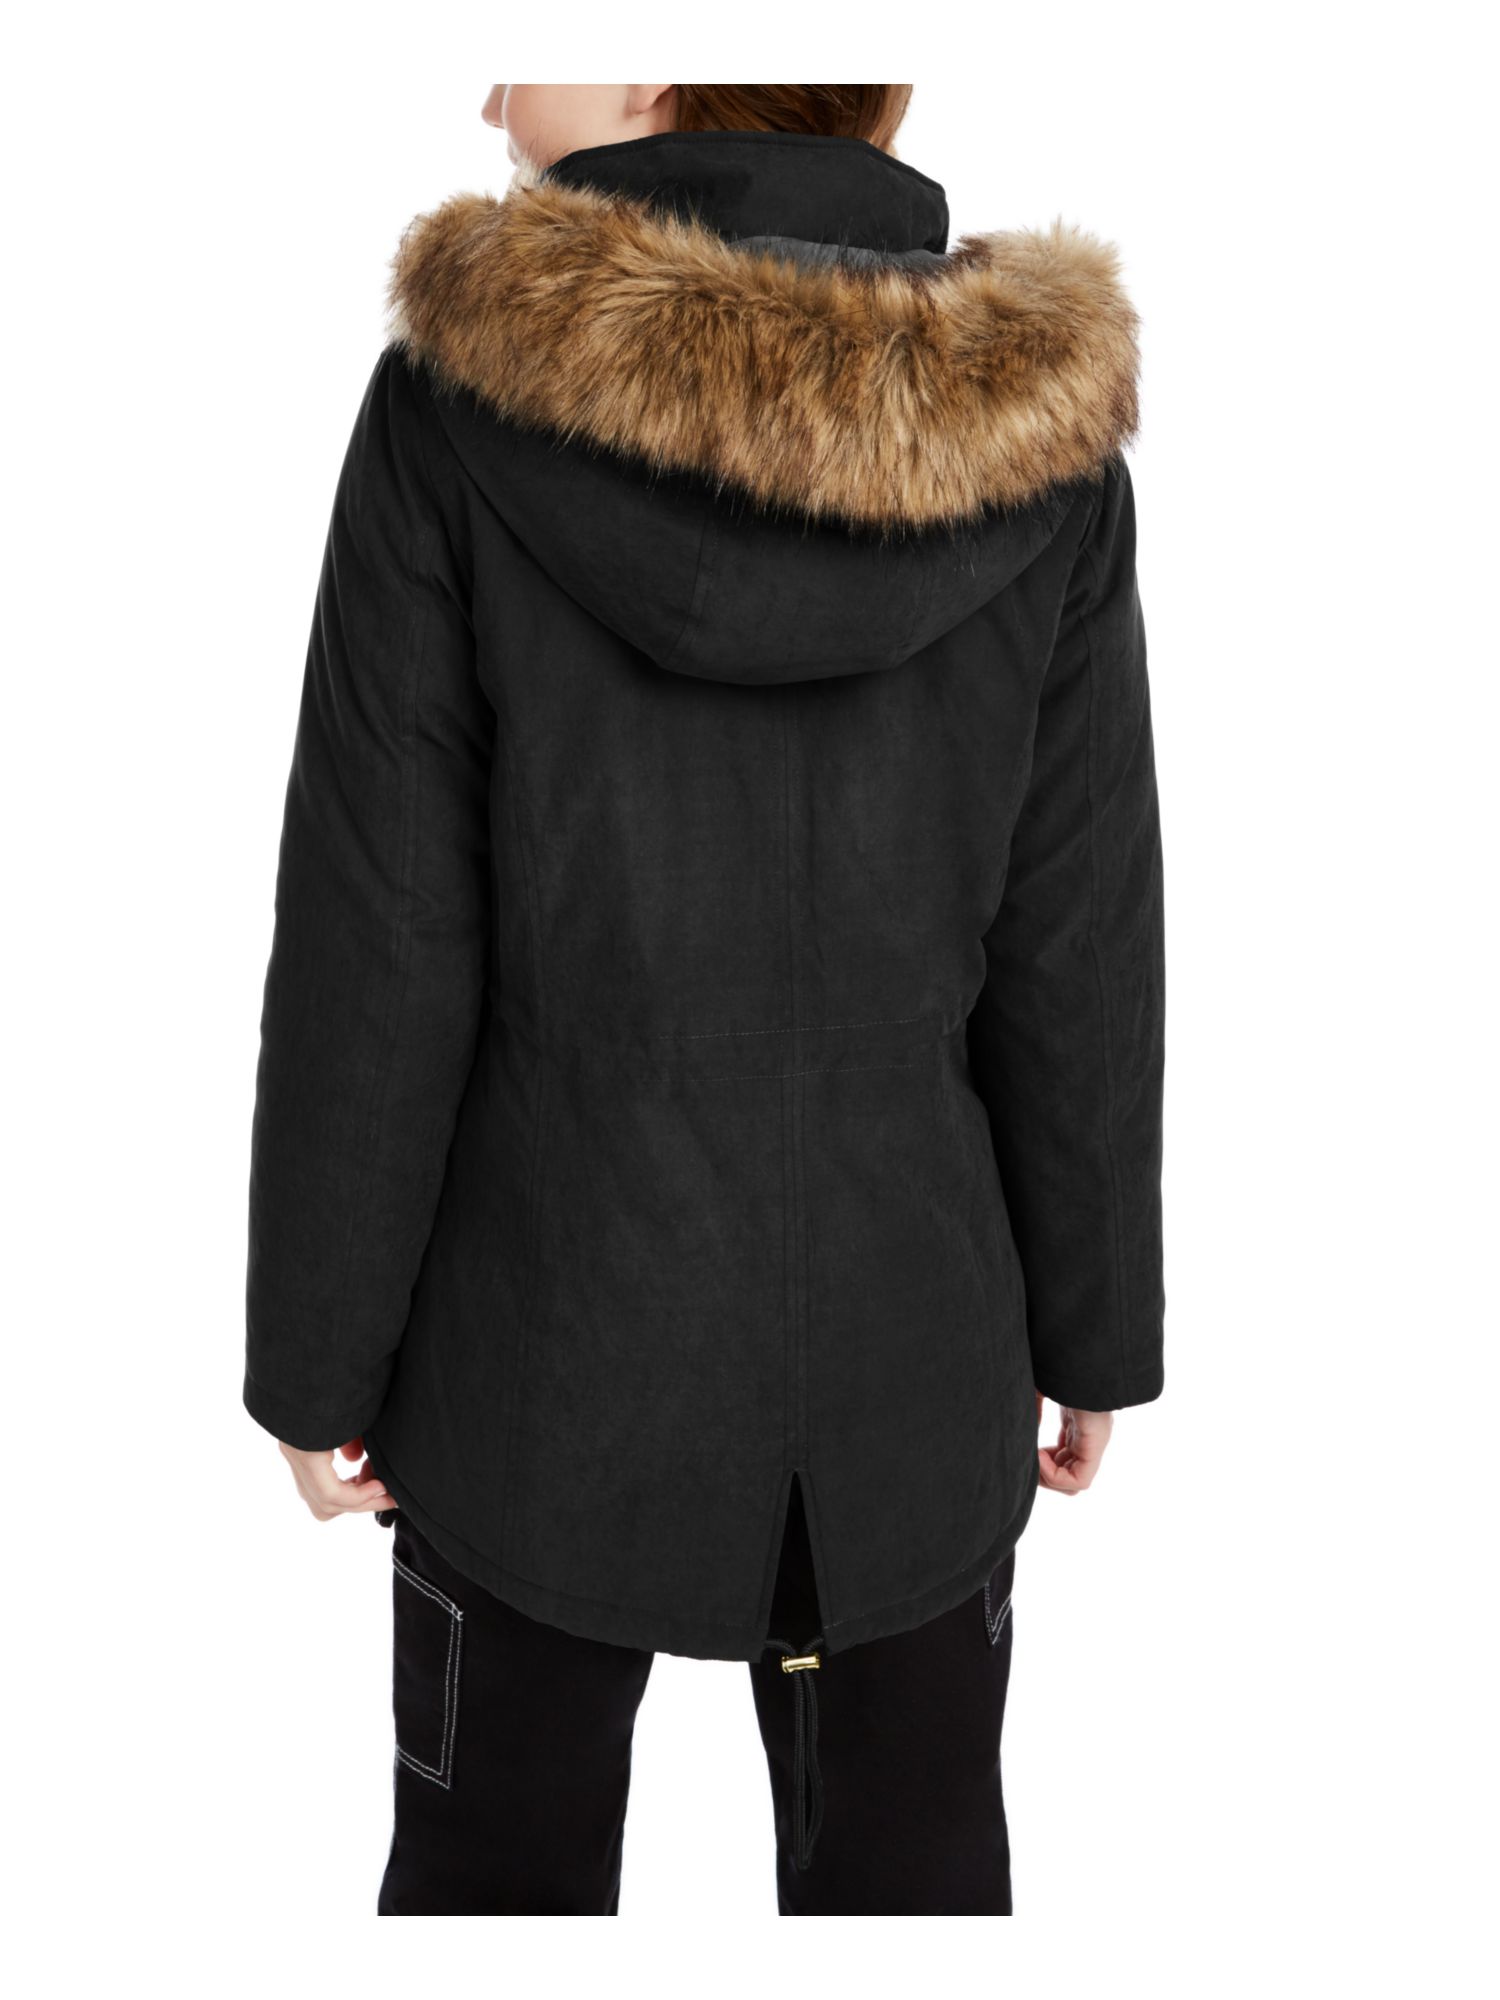 CELEBRITY PINK Womens Black Faux Fur Hood Parka Winter Jacket Coat Juniors M - image 2 of 4